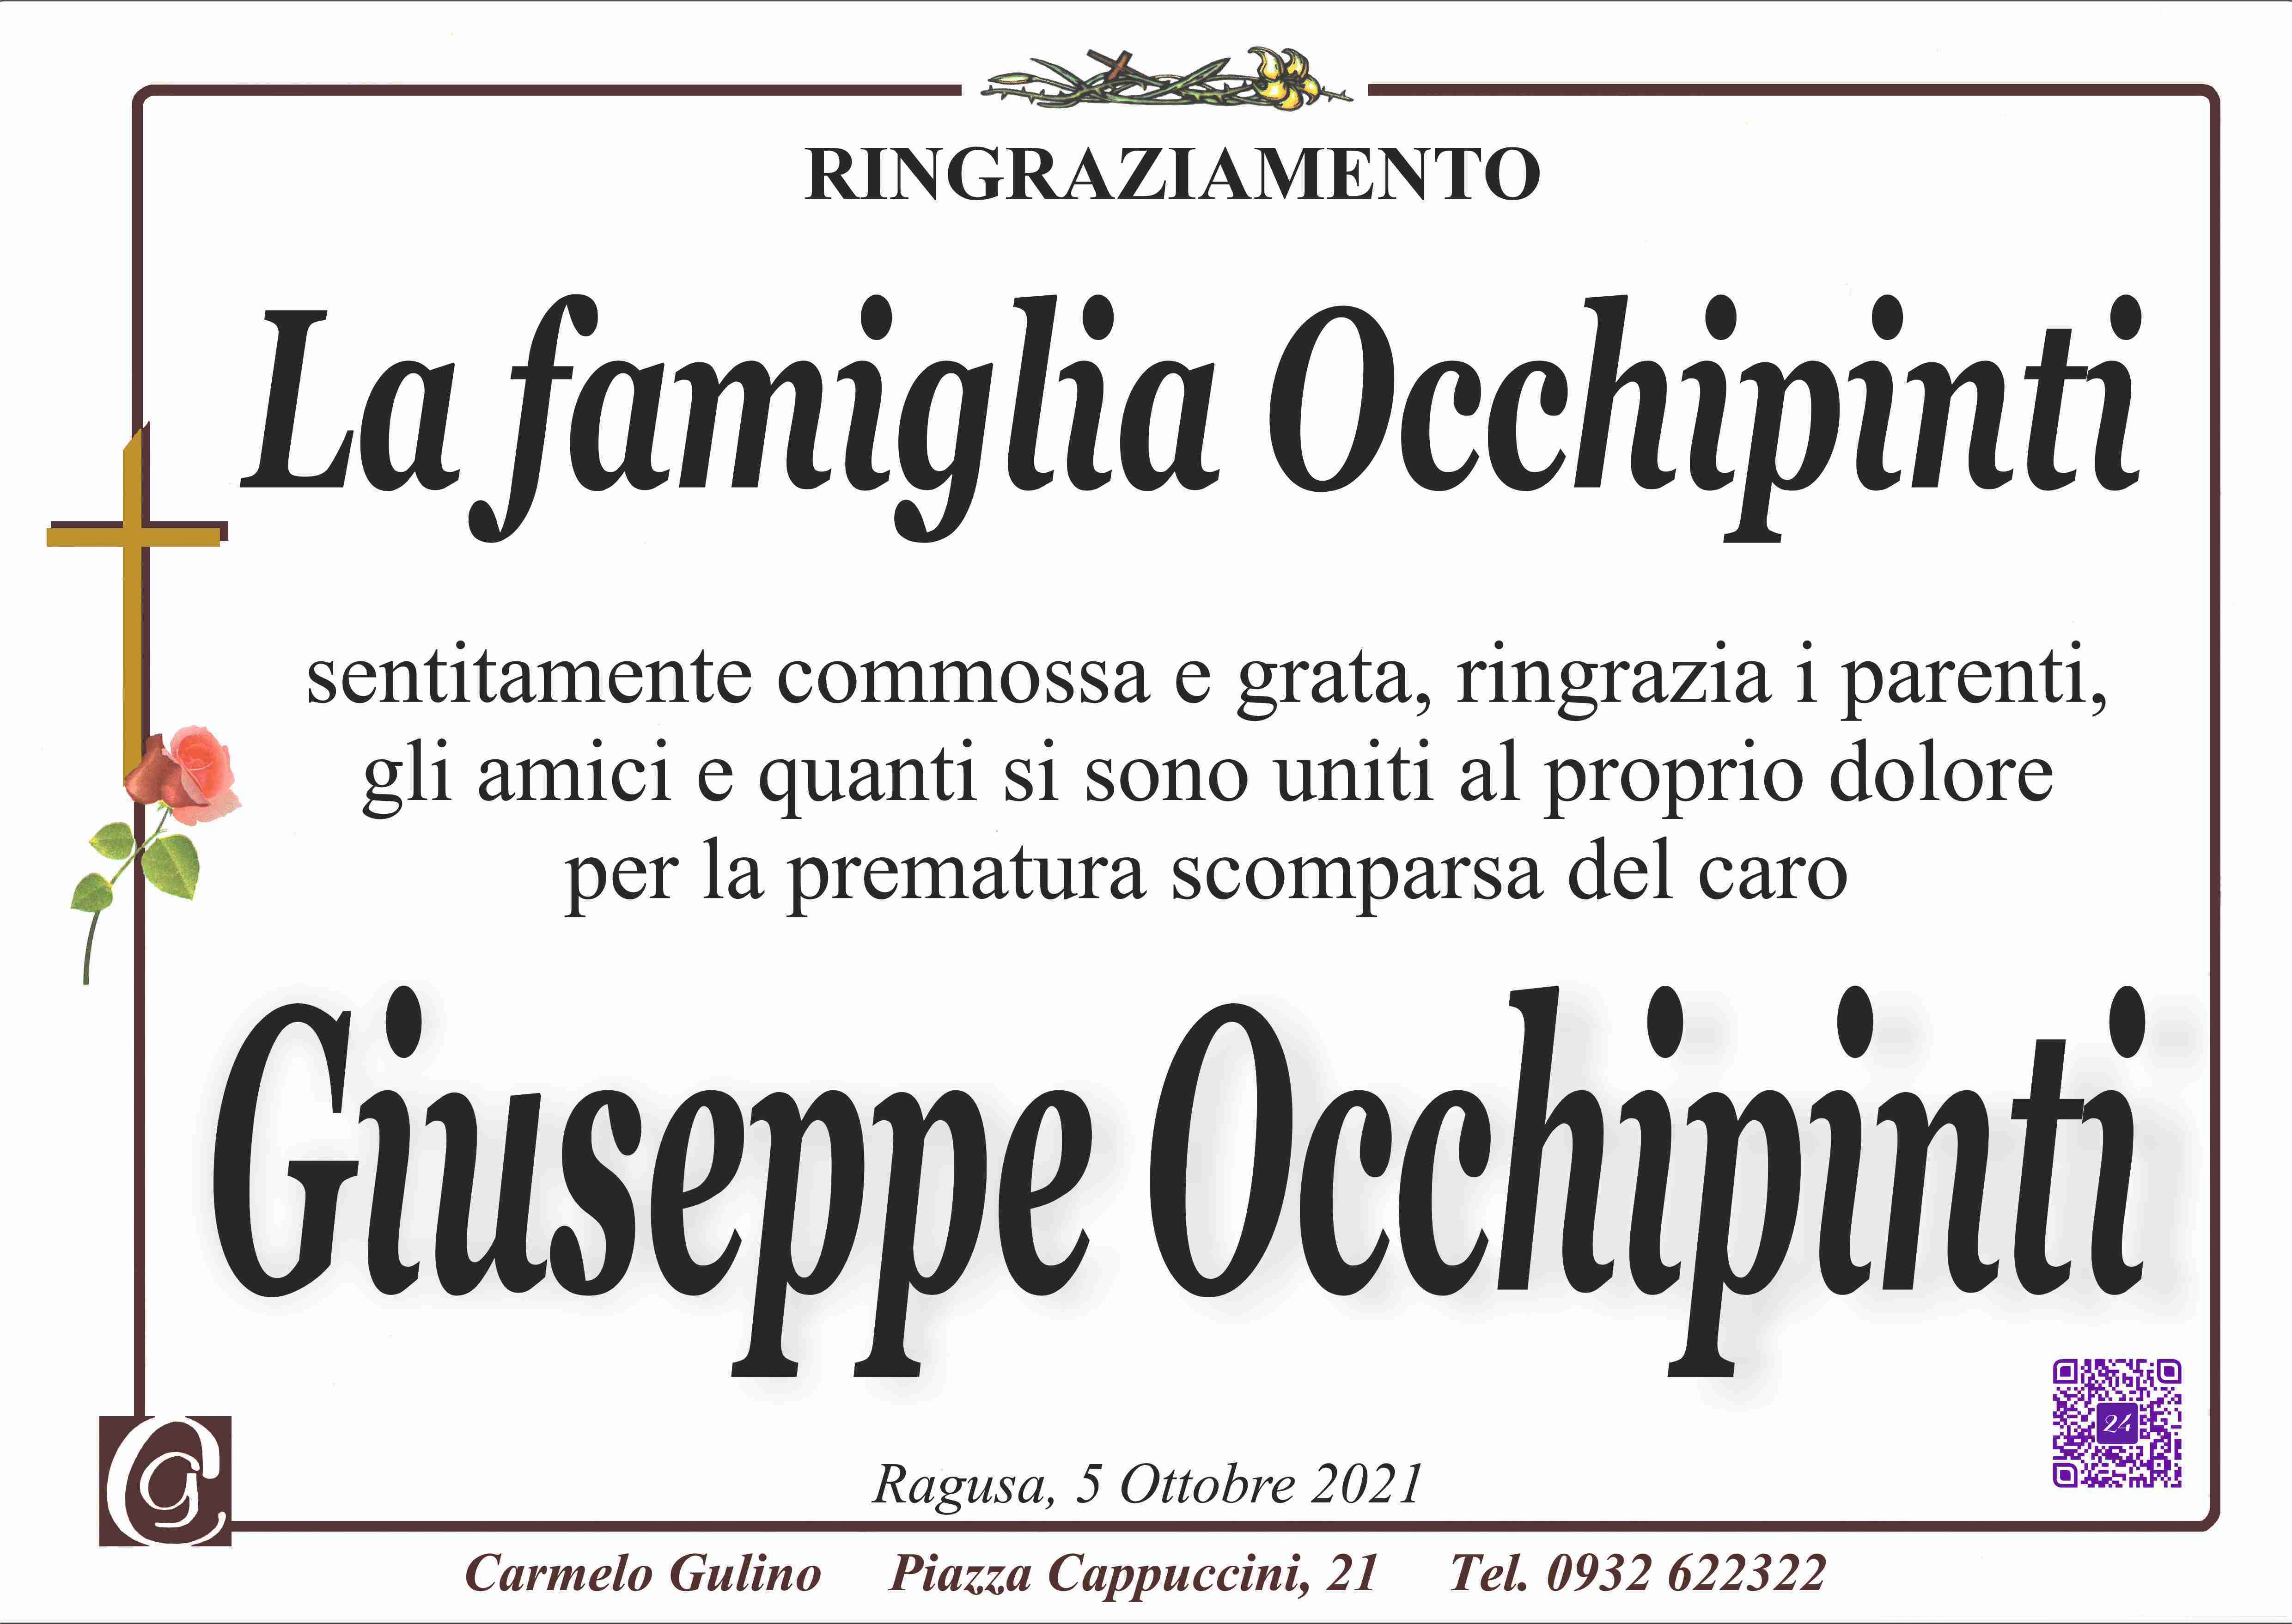 Giuseppe Occhipinti